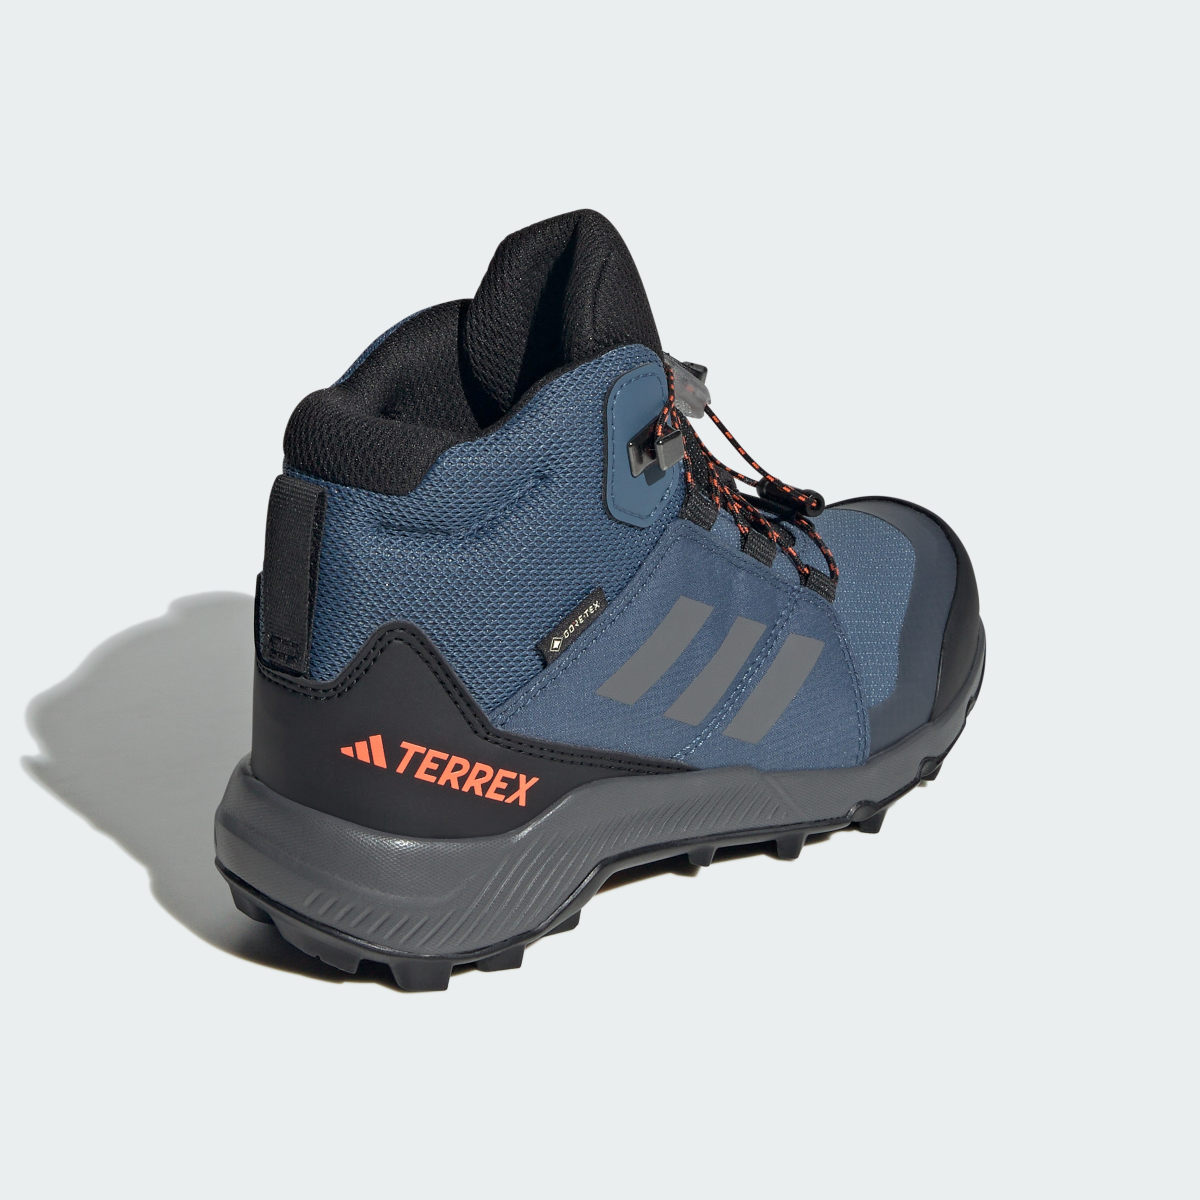 Adidas Chaussure de randonnée Organizer Mid GORE-TEX. 7